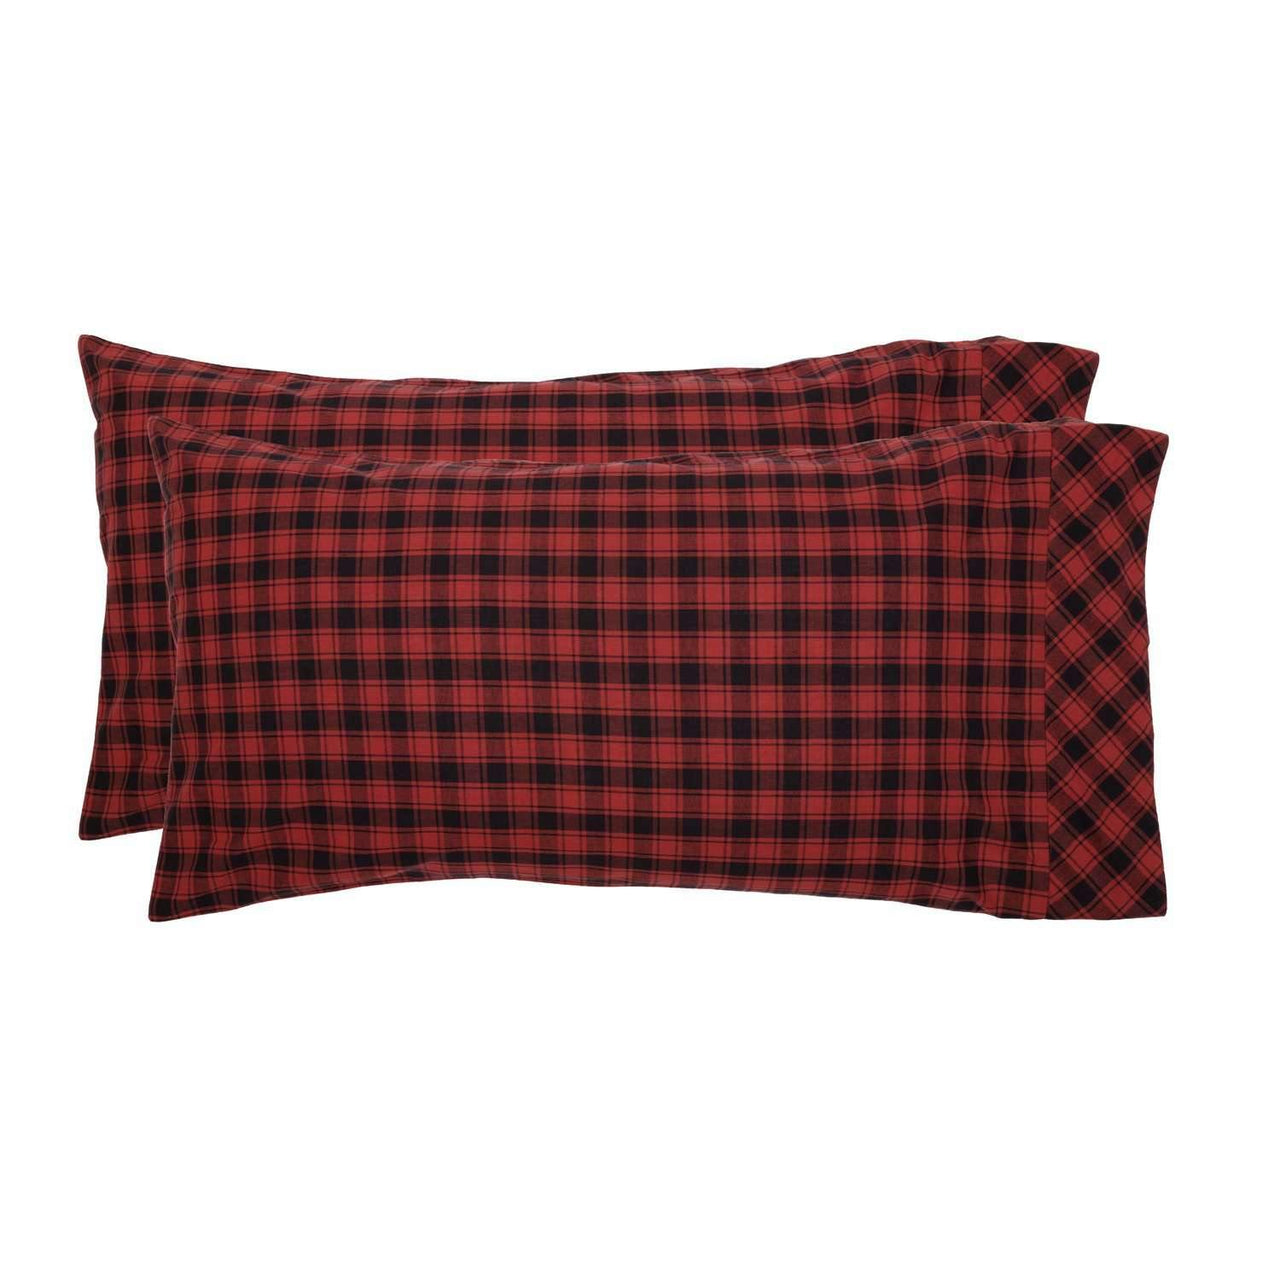 Cumberland King Pillow Case Set of 2 21x40 VHC Brands - The Fox Decor